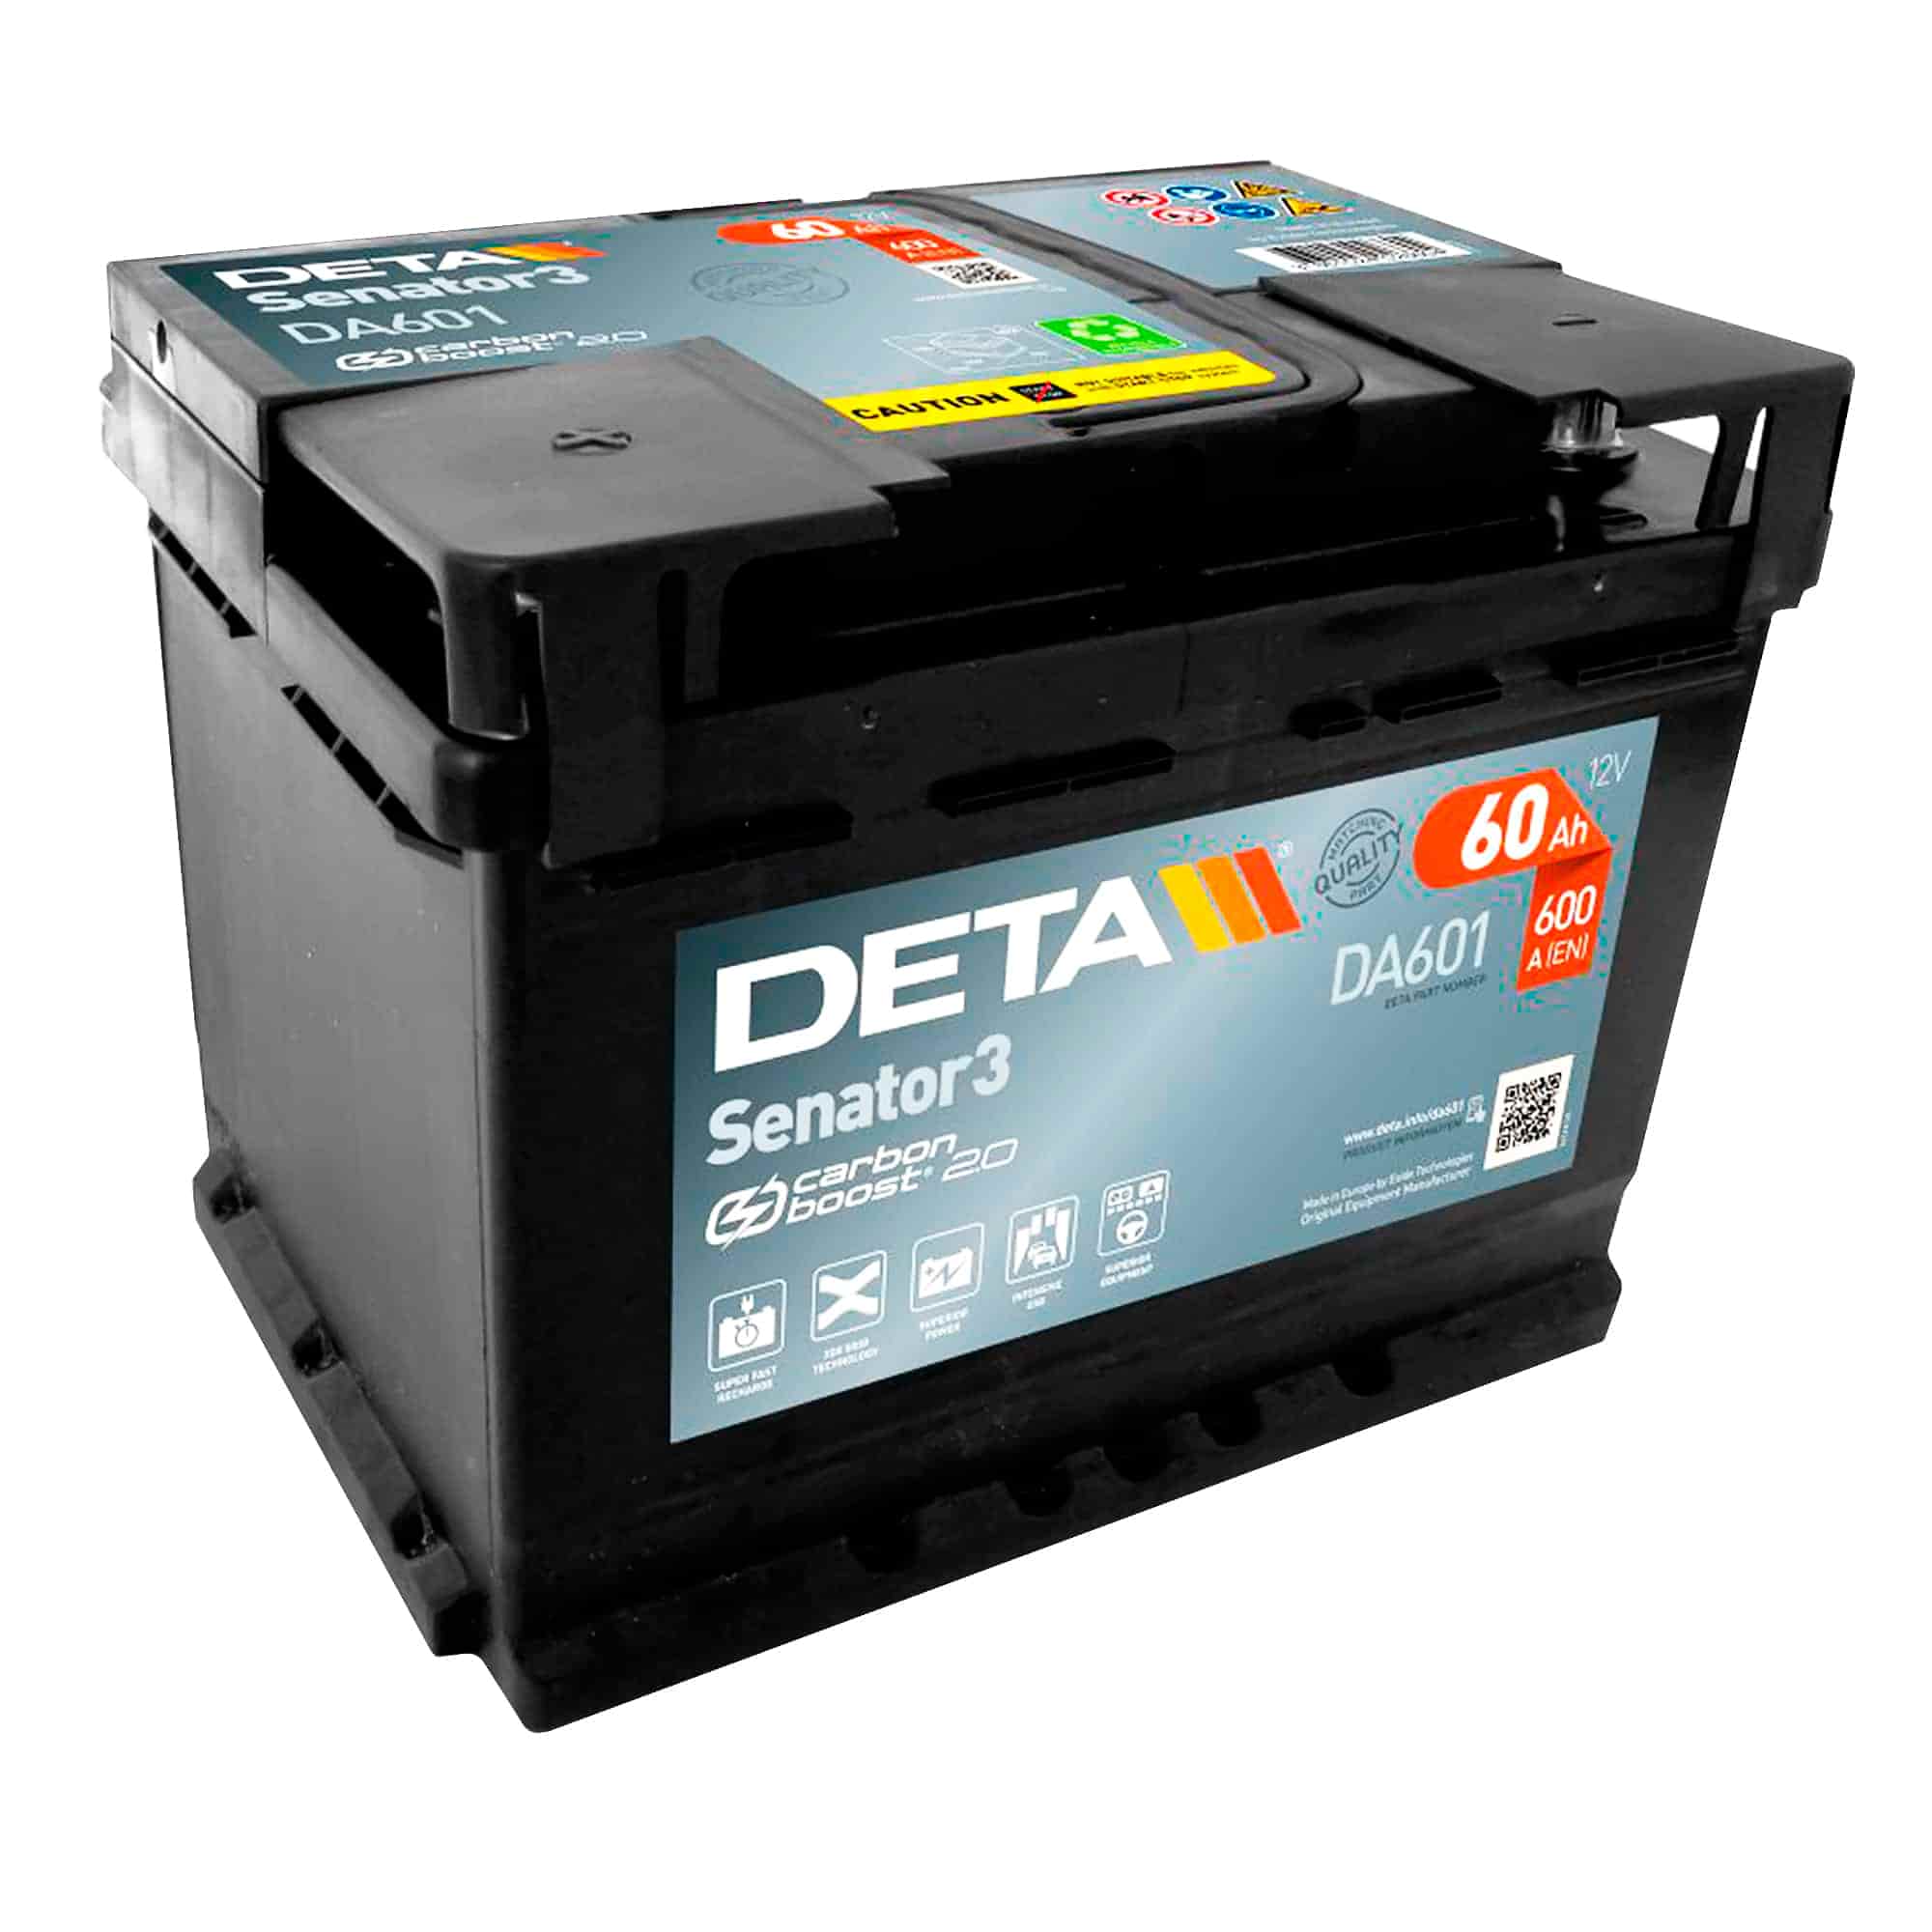 Аккумулятор DETA Senator 3 6СТ-60Ah (+/-) (DA601)